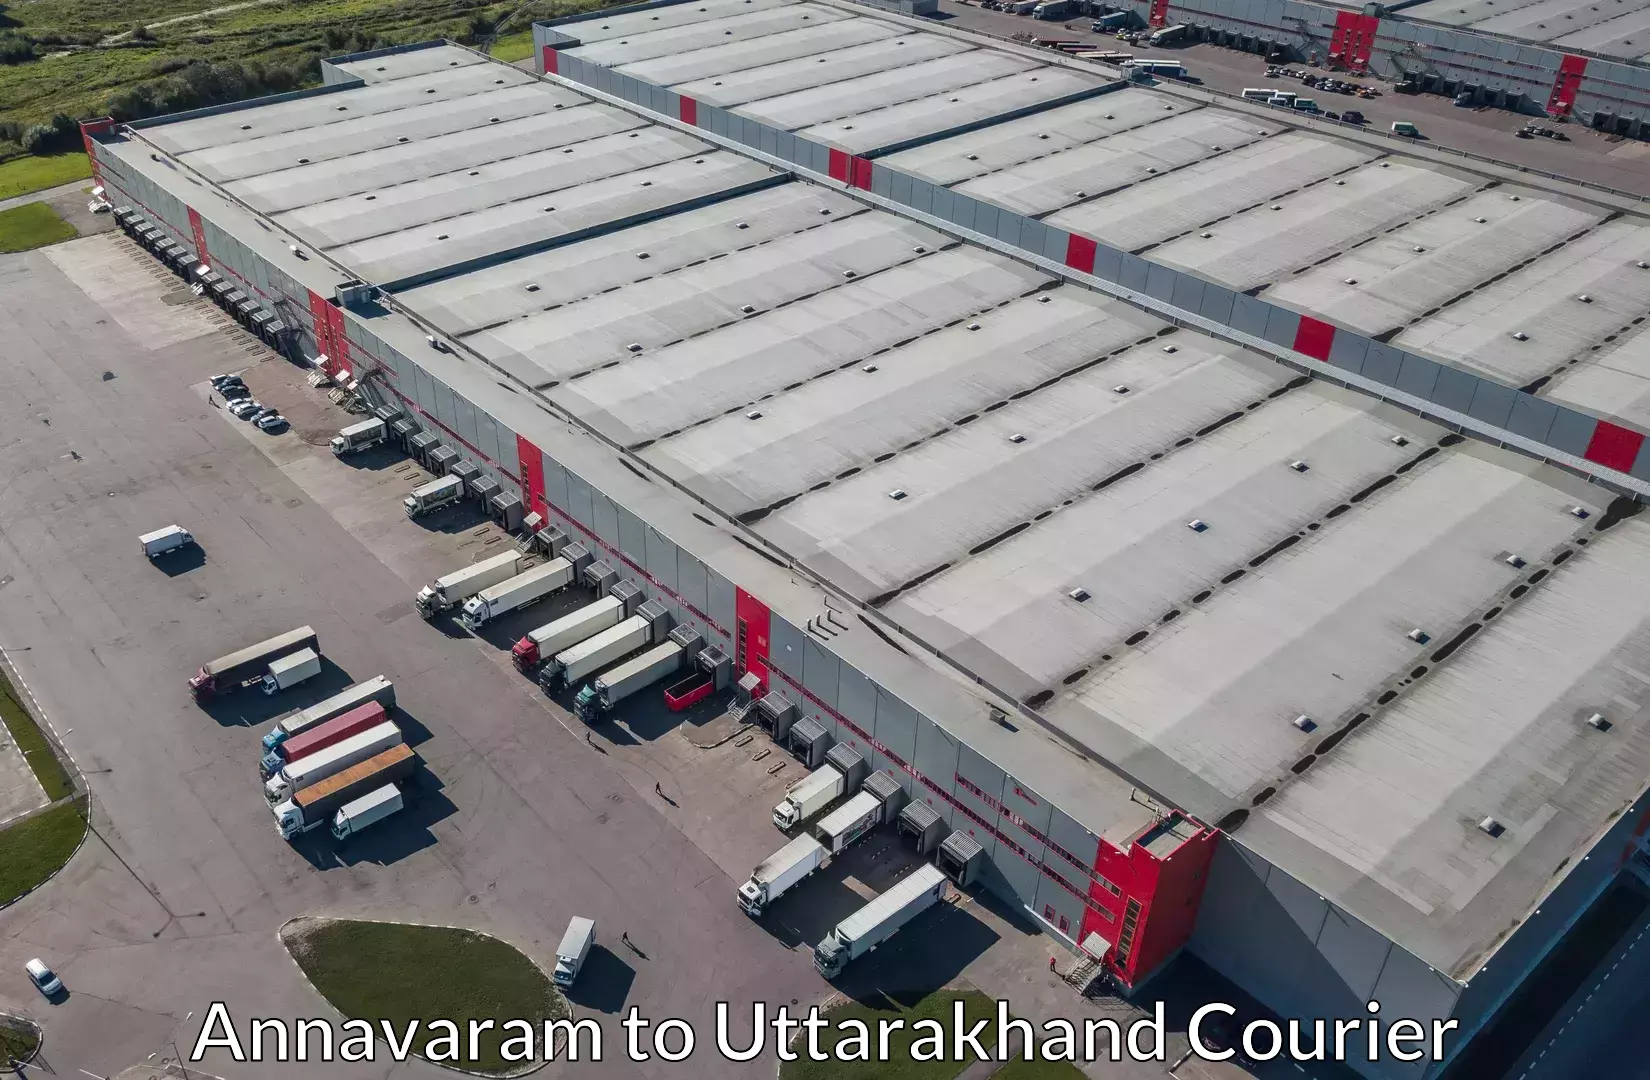 Specialized moving company Annavaram to Bageshwar